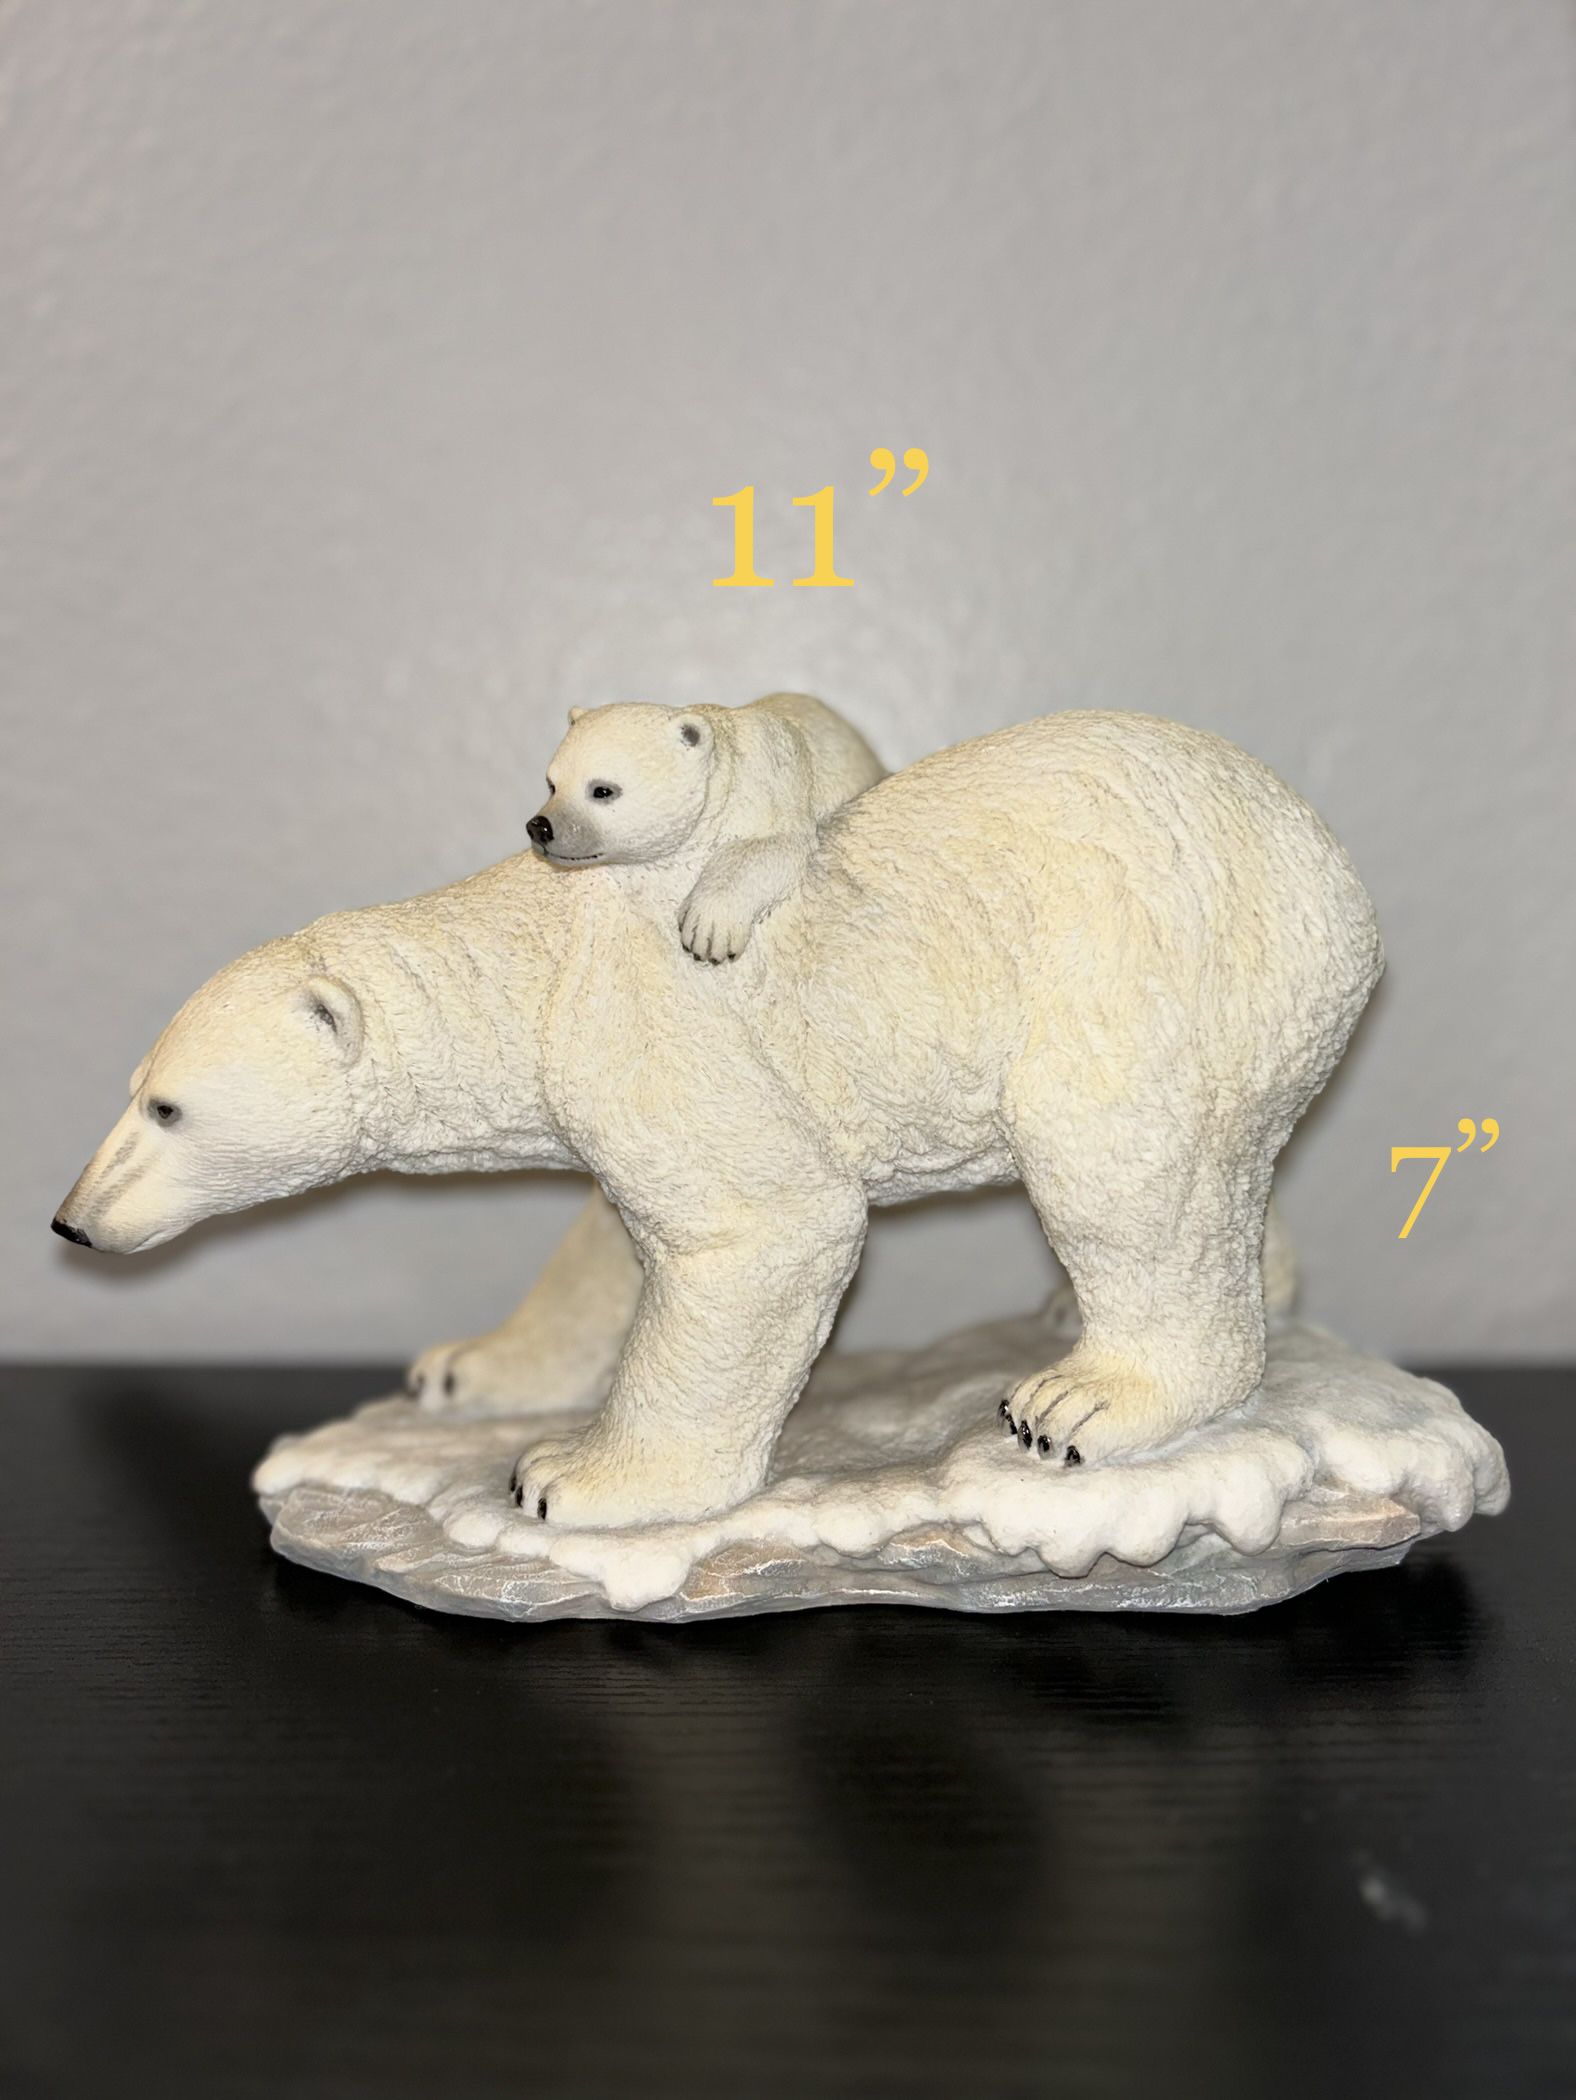     Veronese Design Polar Bear Mother With Adorable Freeloading Cub Statue